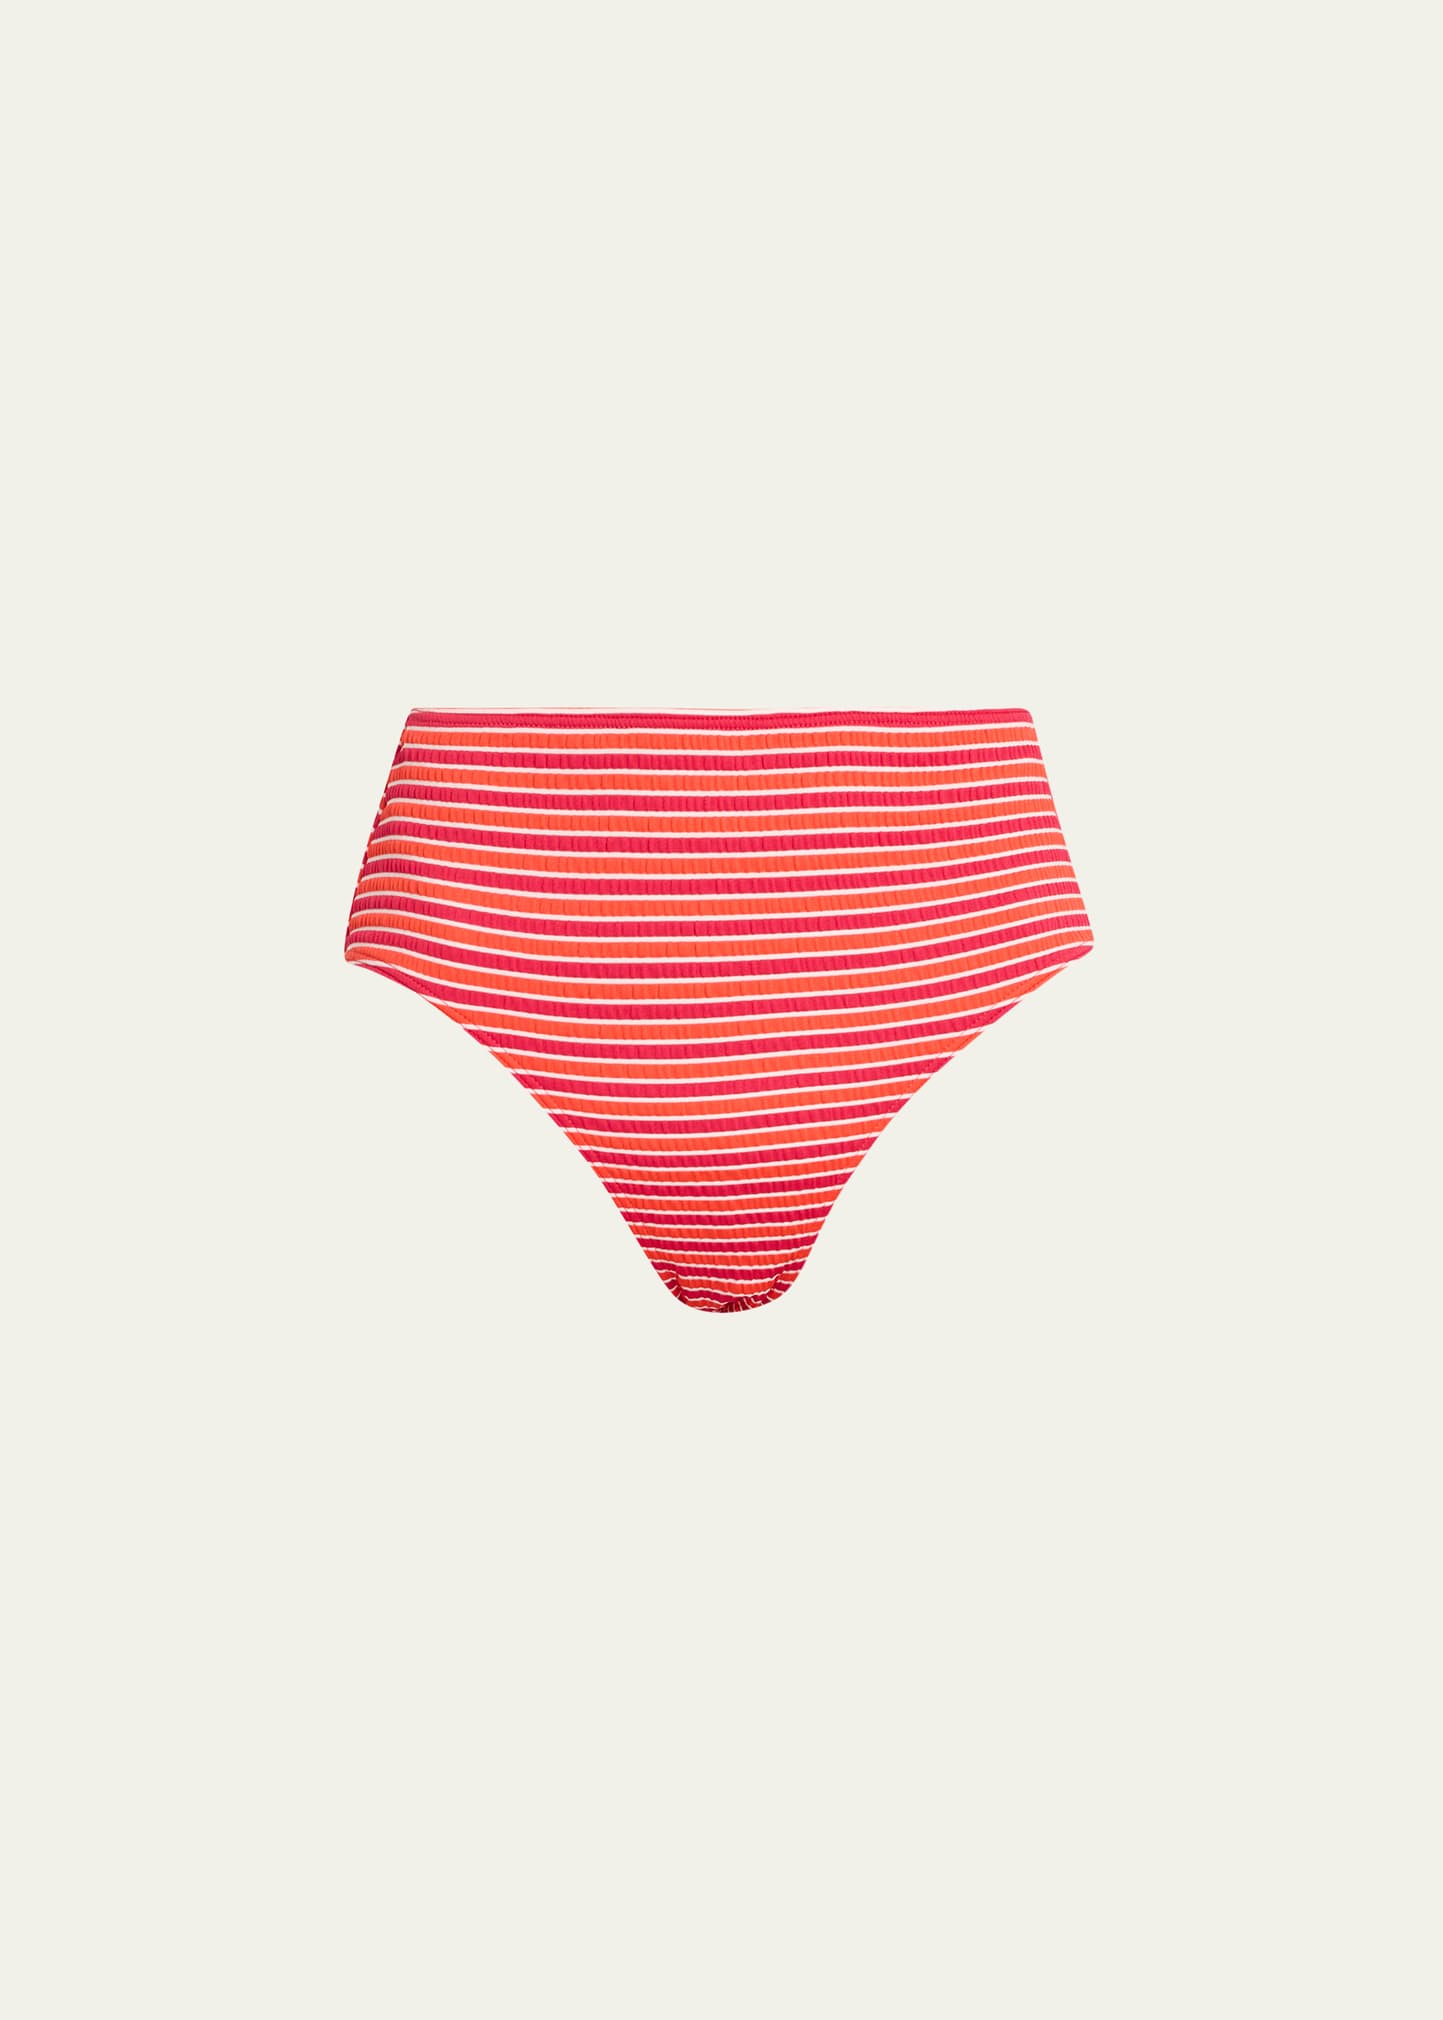 The Lilo Seersucker Striped Bikini Bottoms